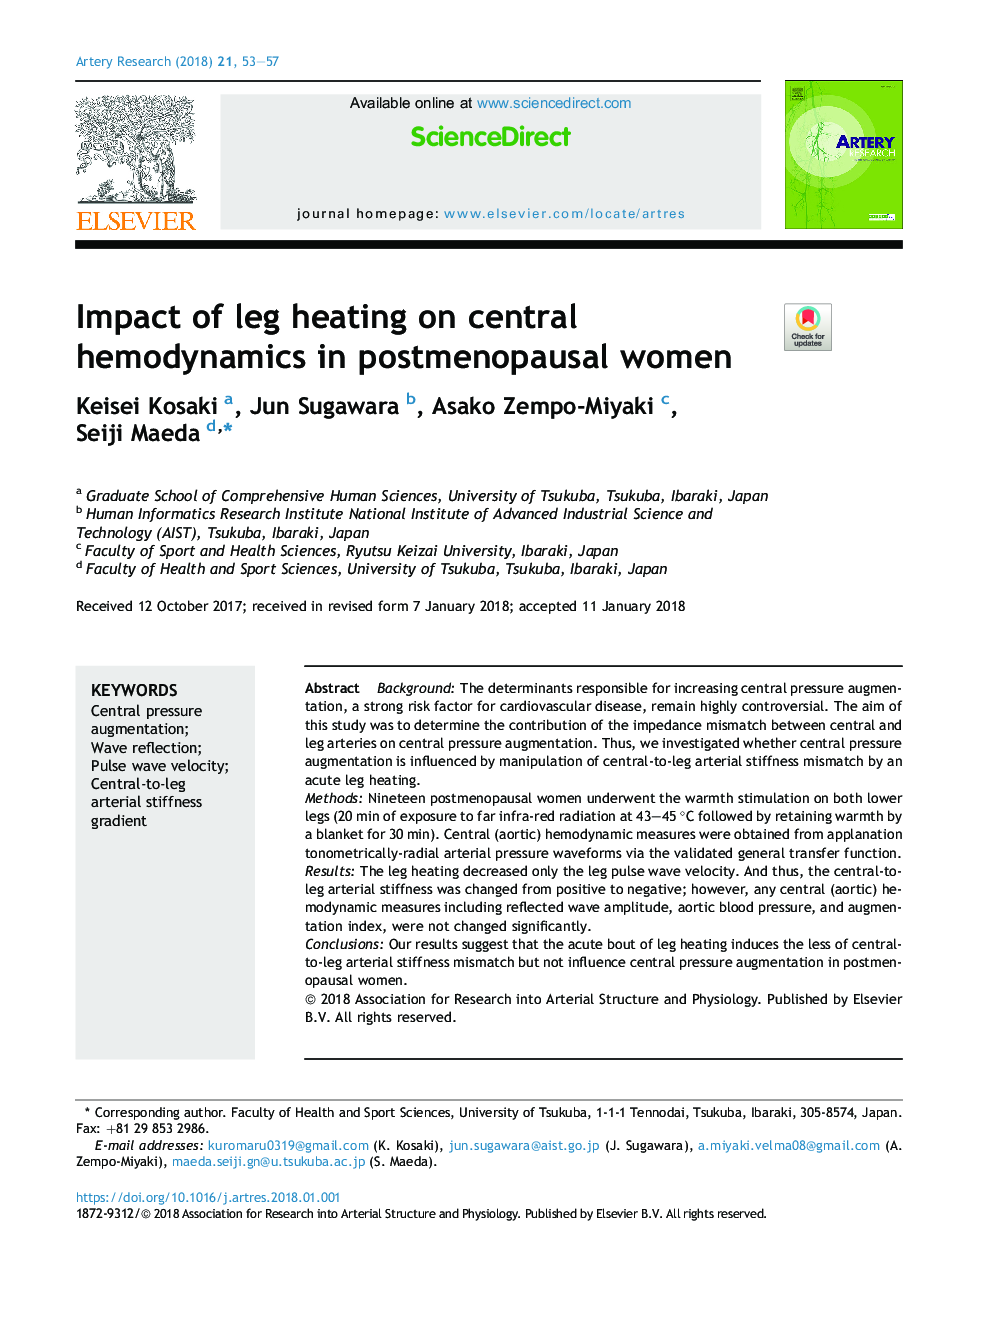 Impact of leg heating on central hemodynamics in postmenopausal women